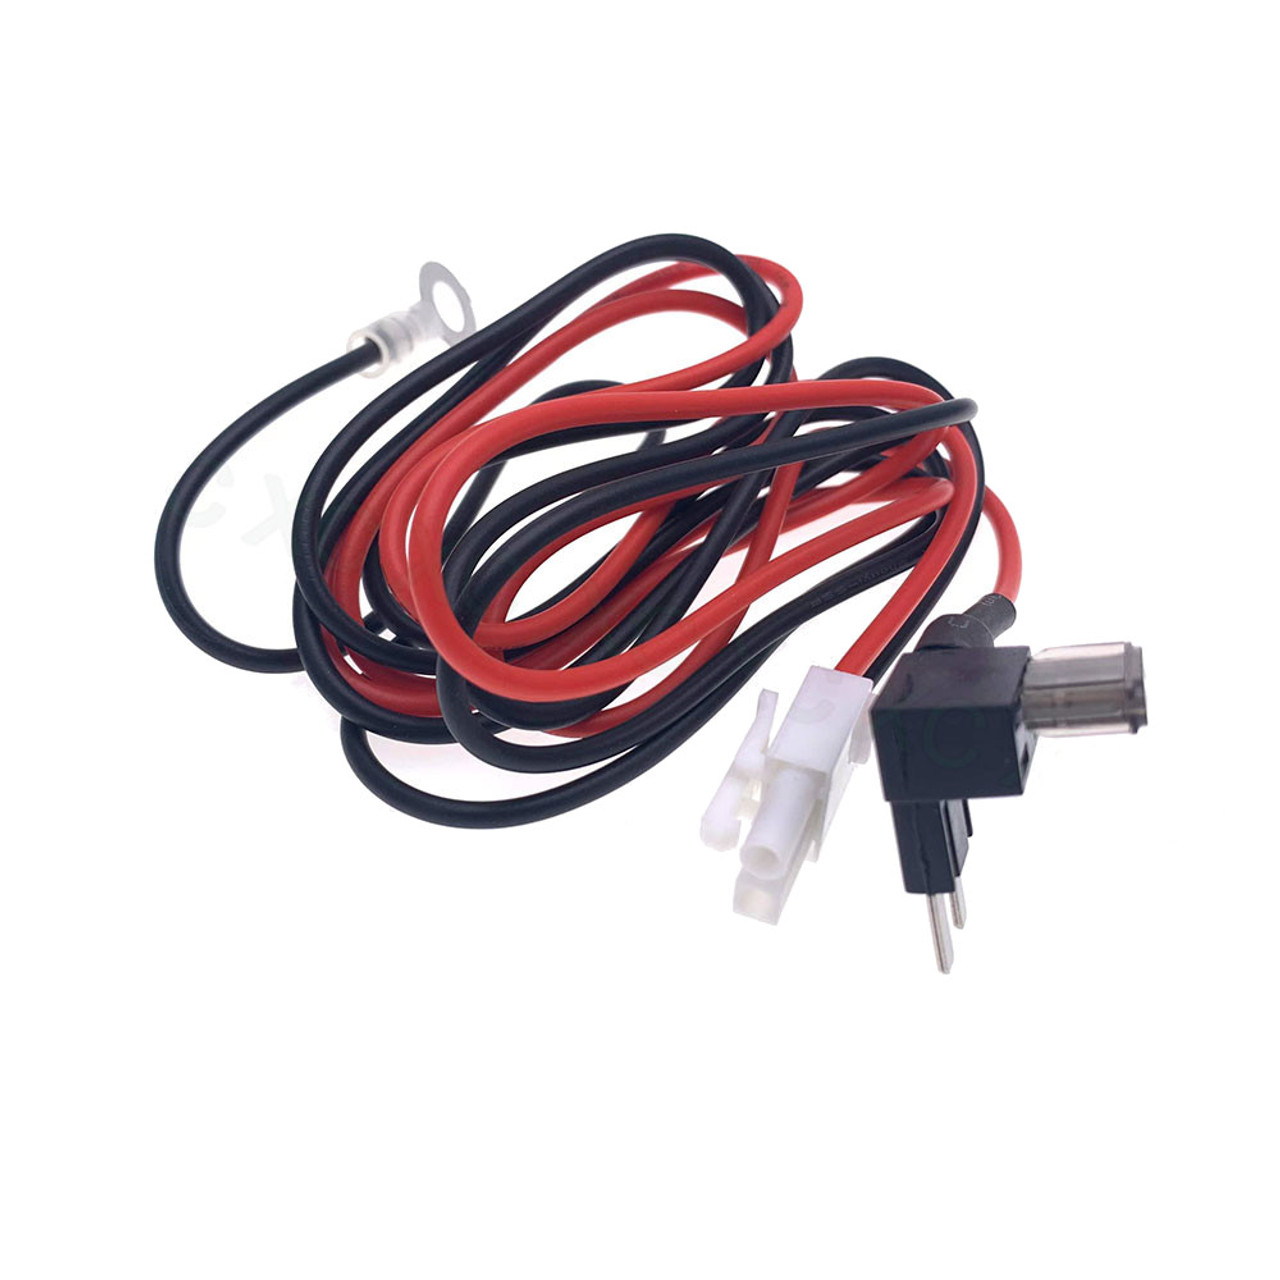 ATD FFU-17901 Dual USB ASR Dash Switch For VW T5 Transporter